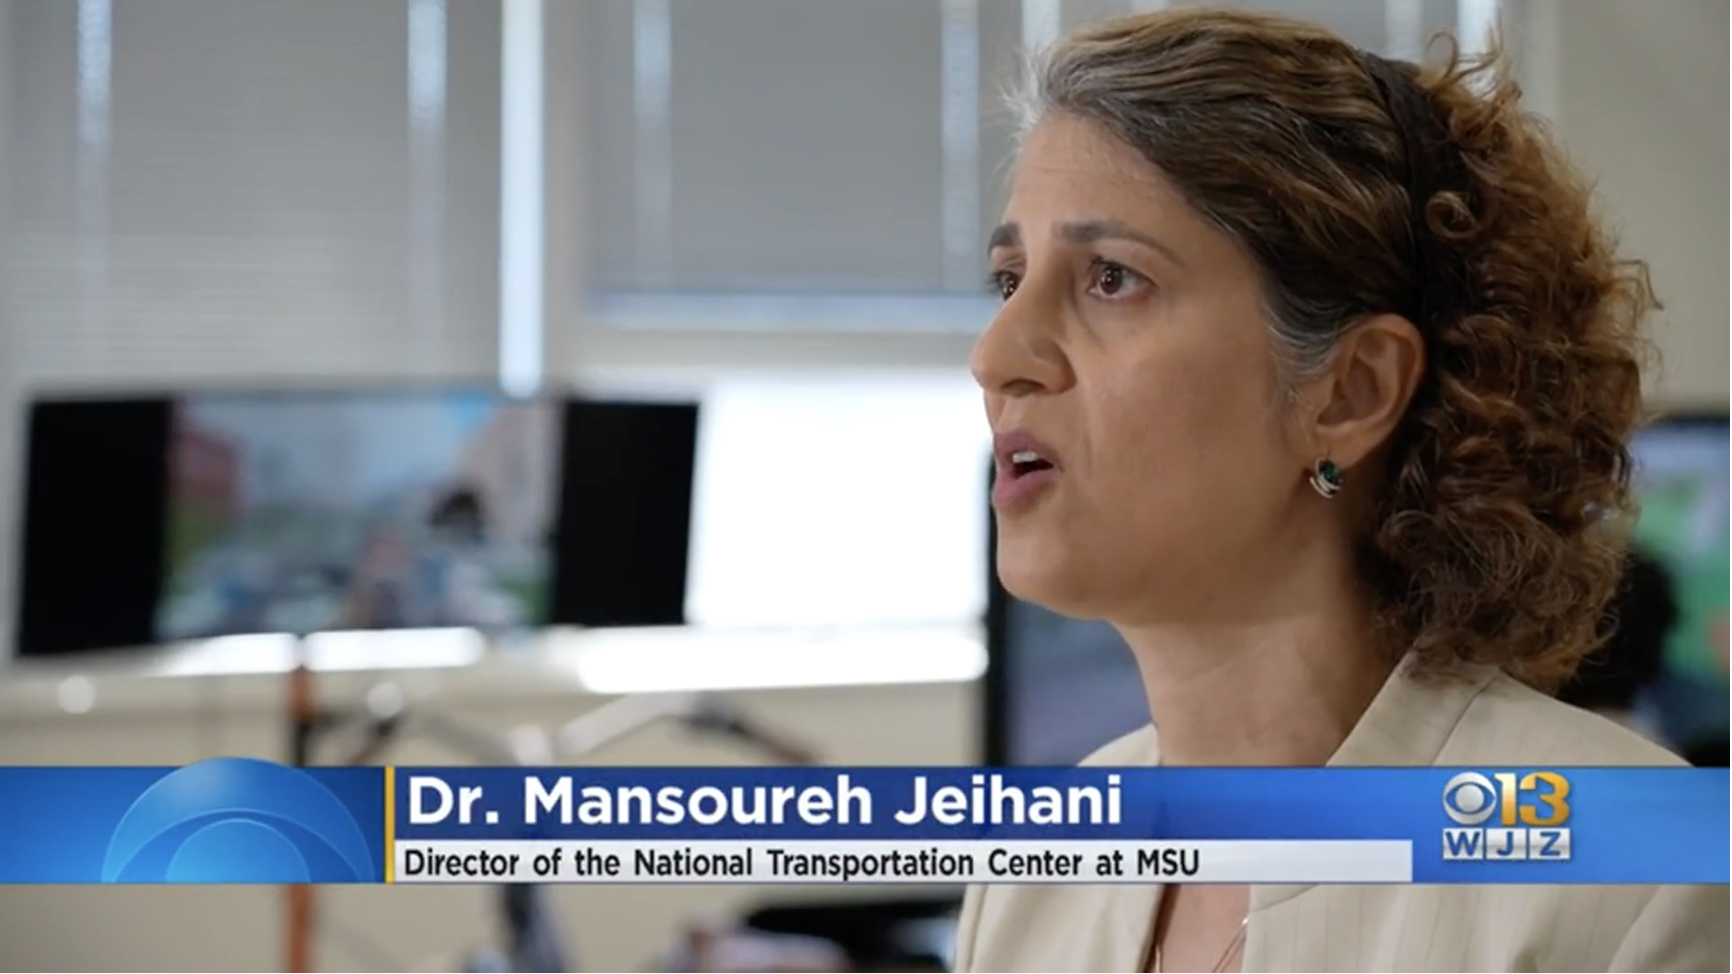 Dr. Mansoureh Jeihani